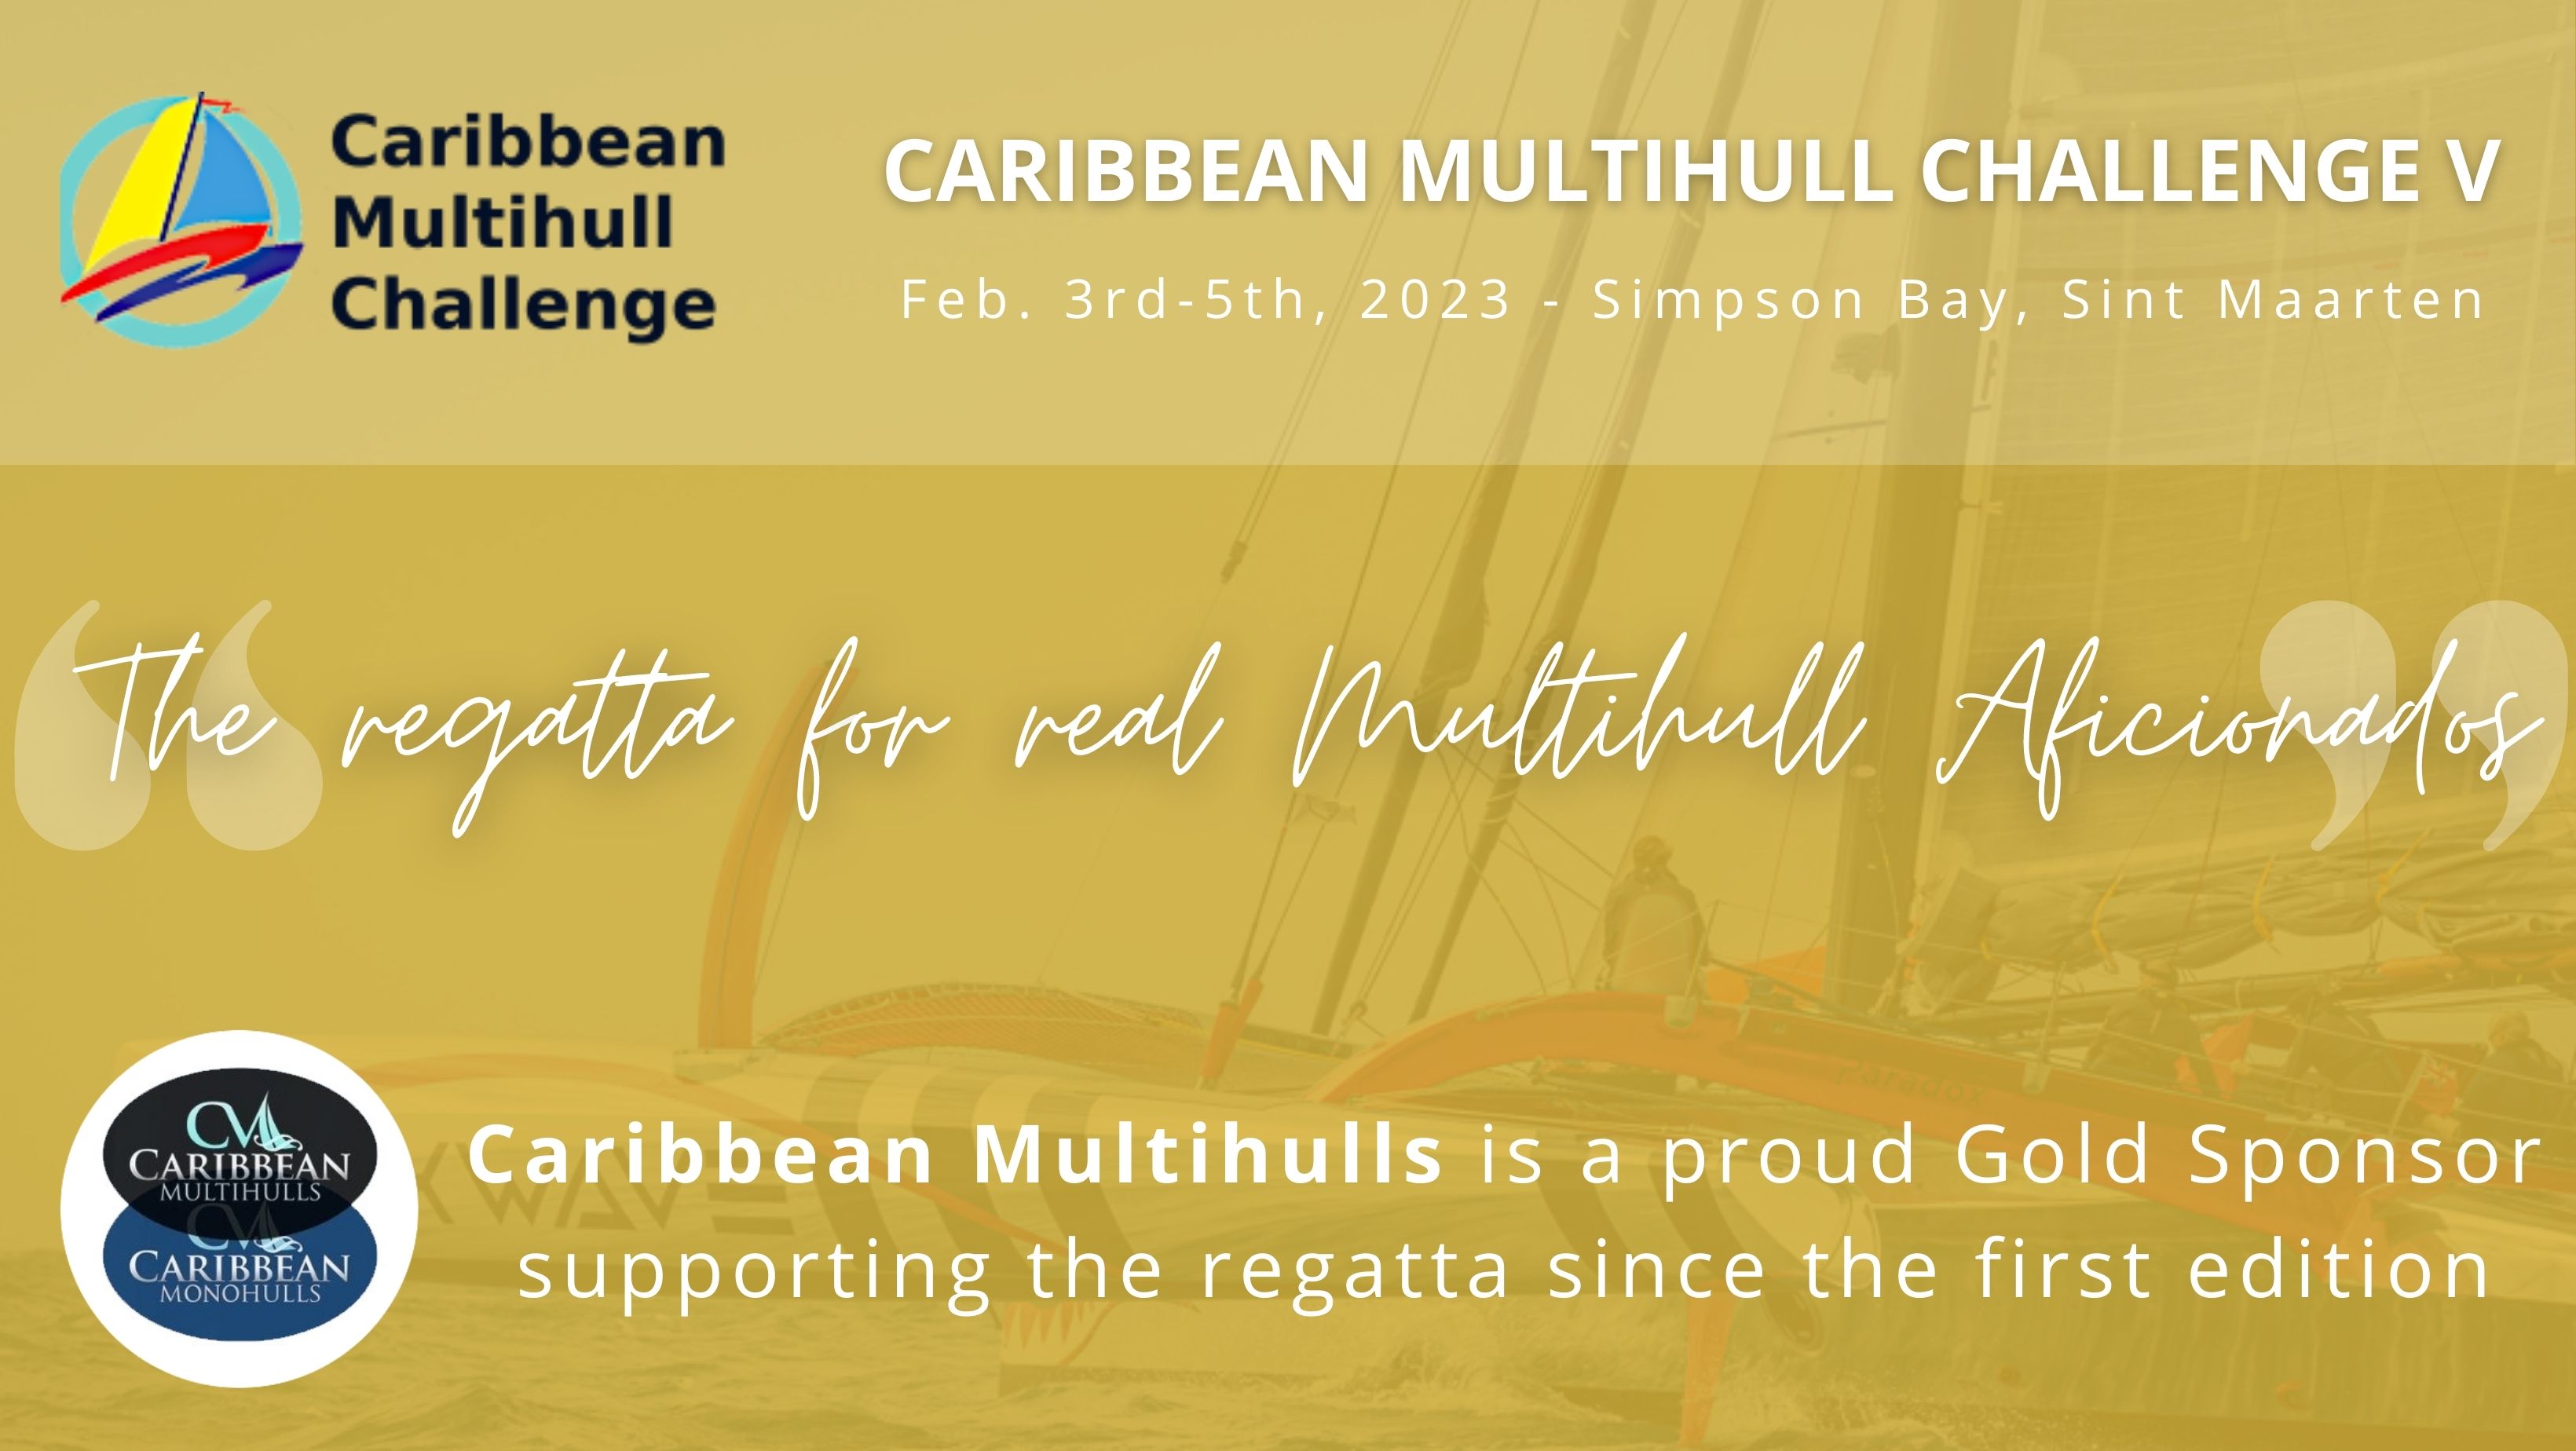 Caribbean Multihull Challenge 2023 - CMC 5th Edition